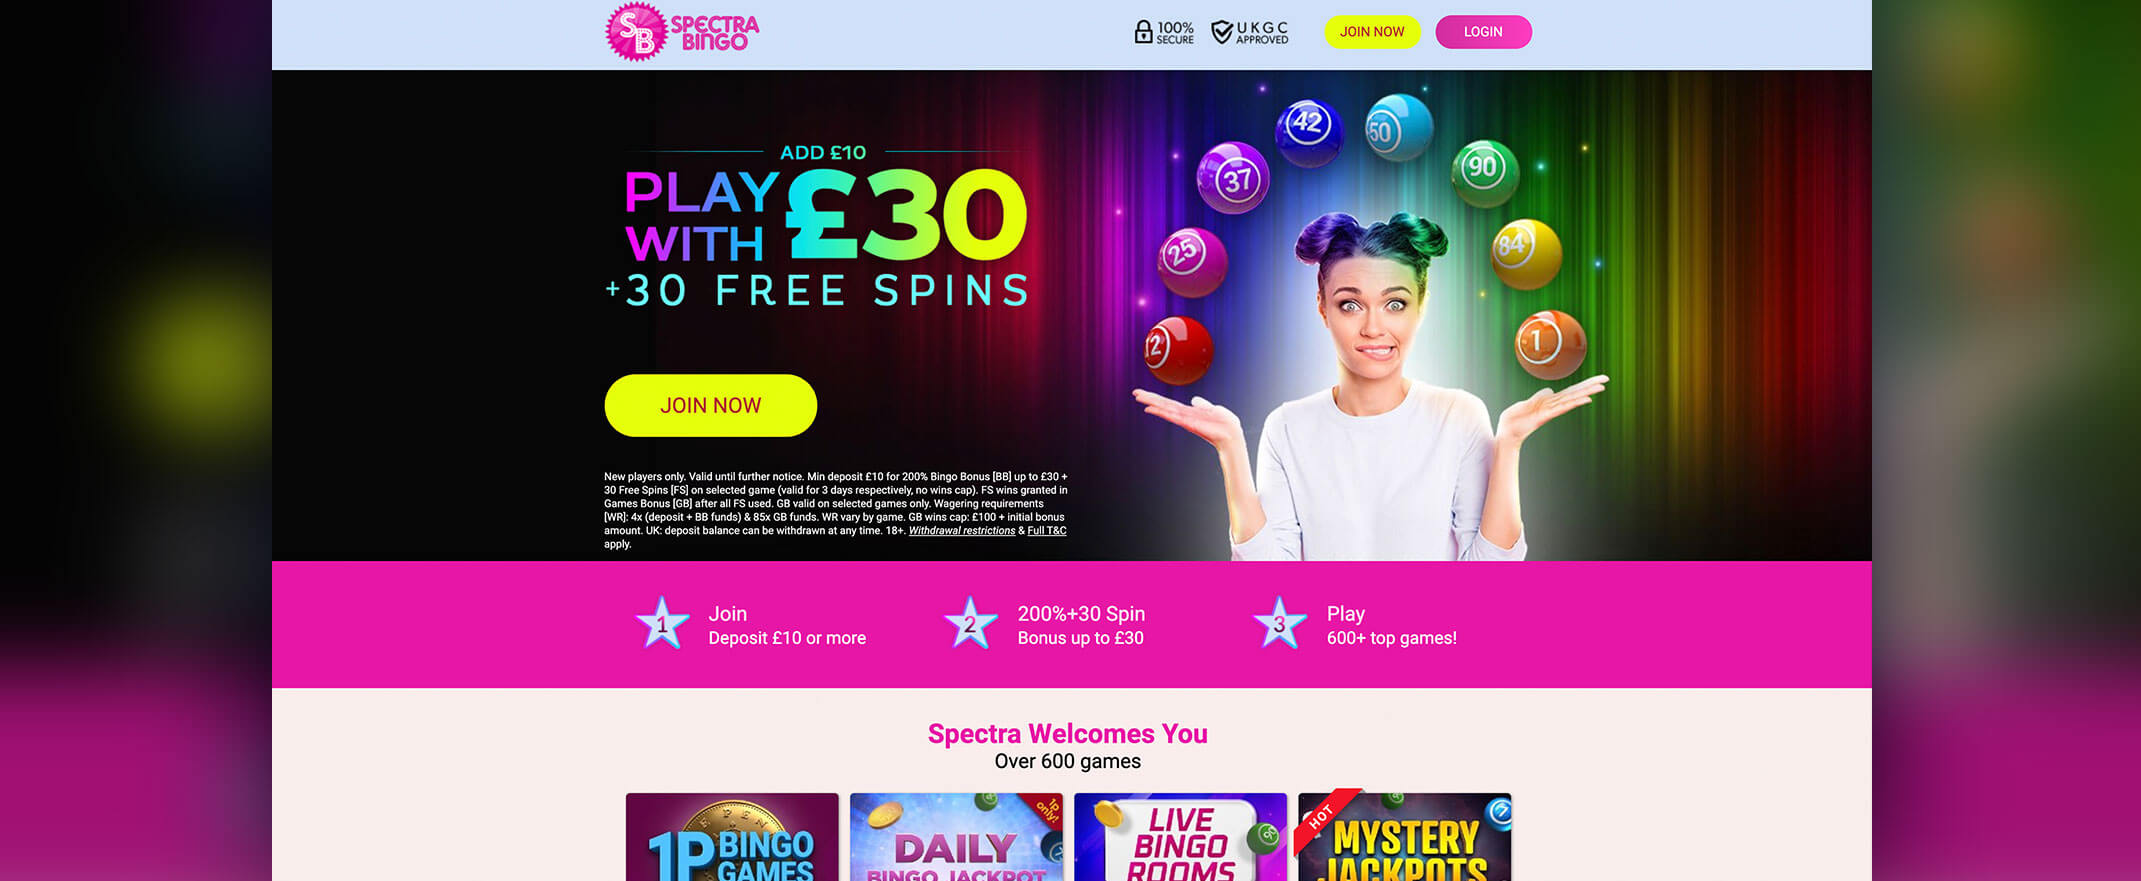 Spectra Bingo homepage screenshot #ad